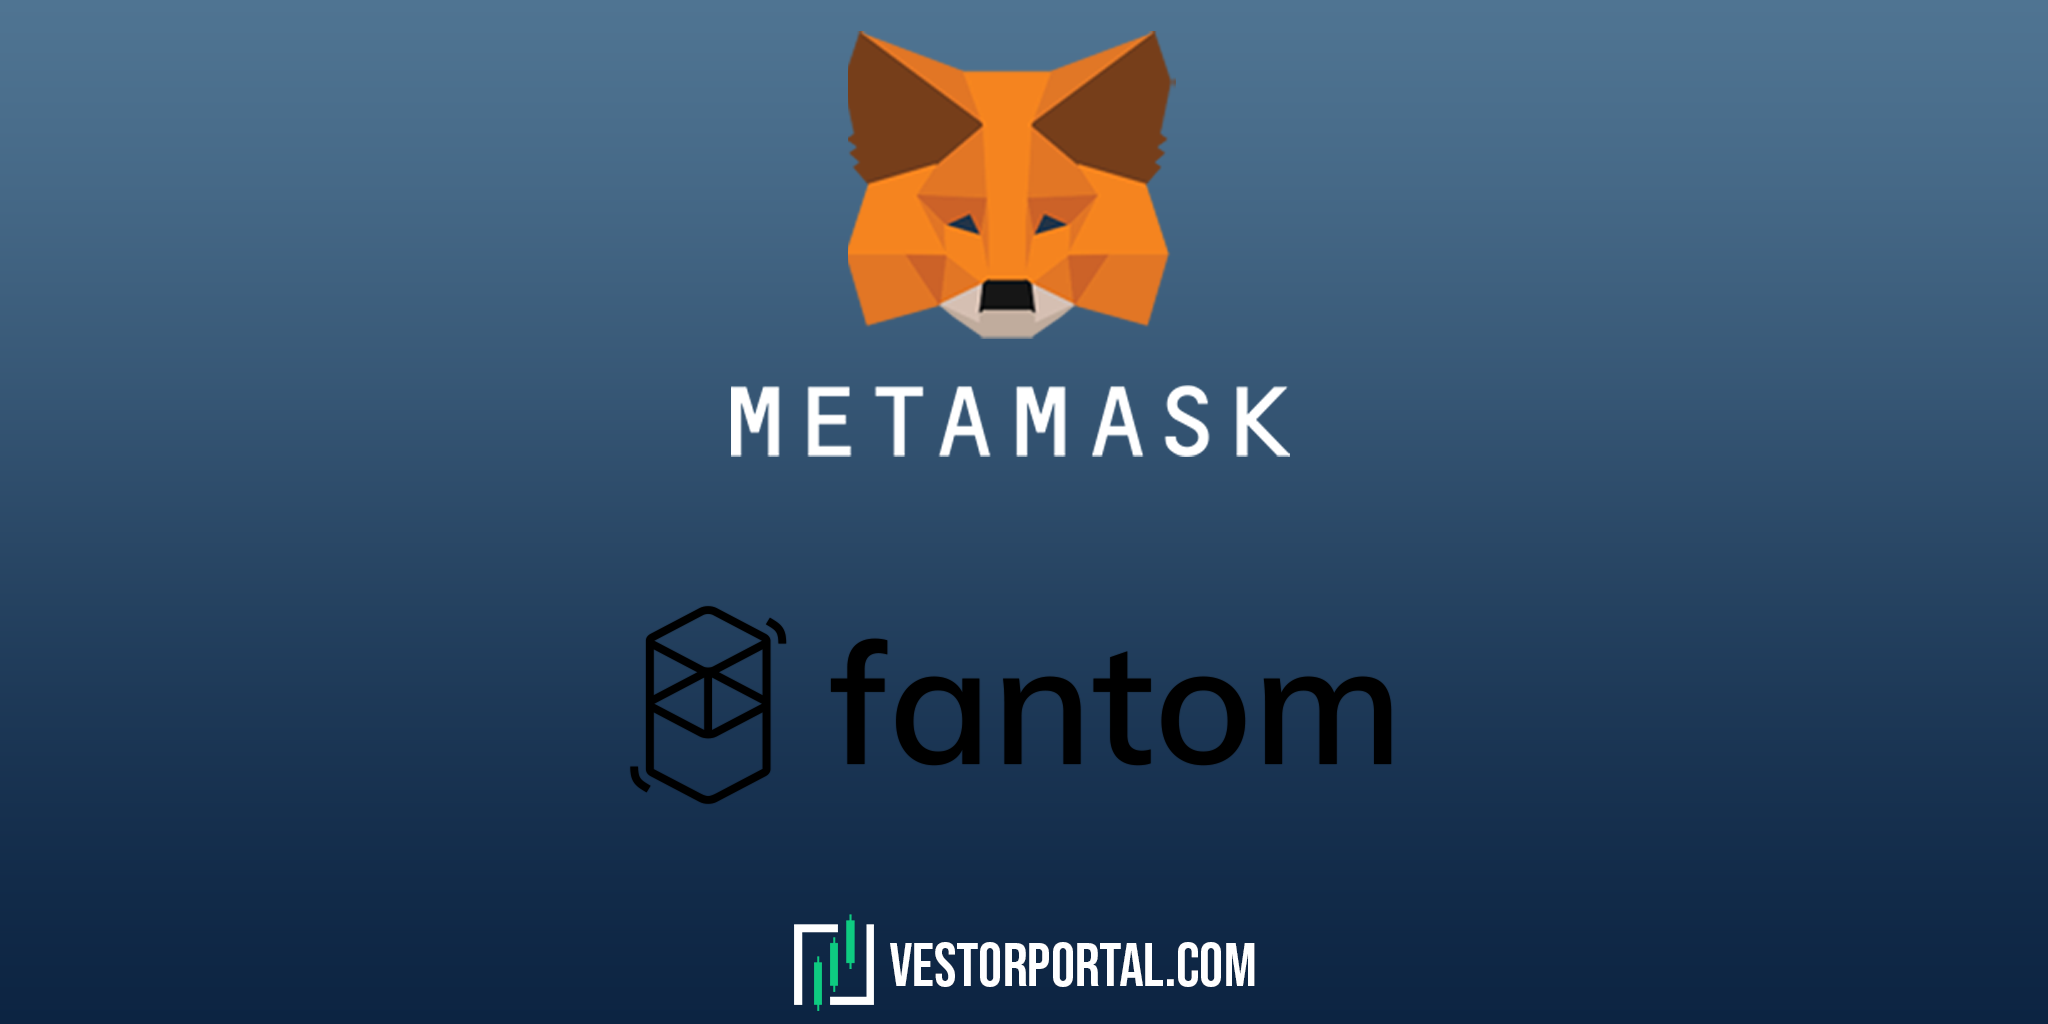 How to setup MetaMask for the Fantom Network (FTM)?